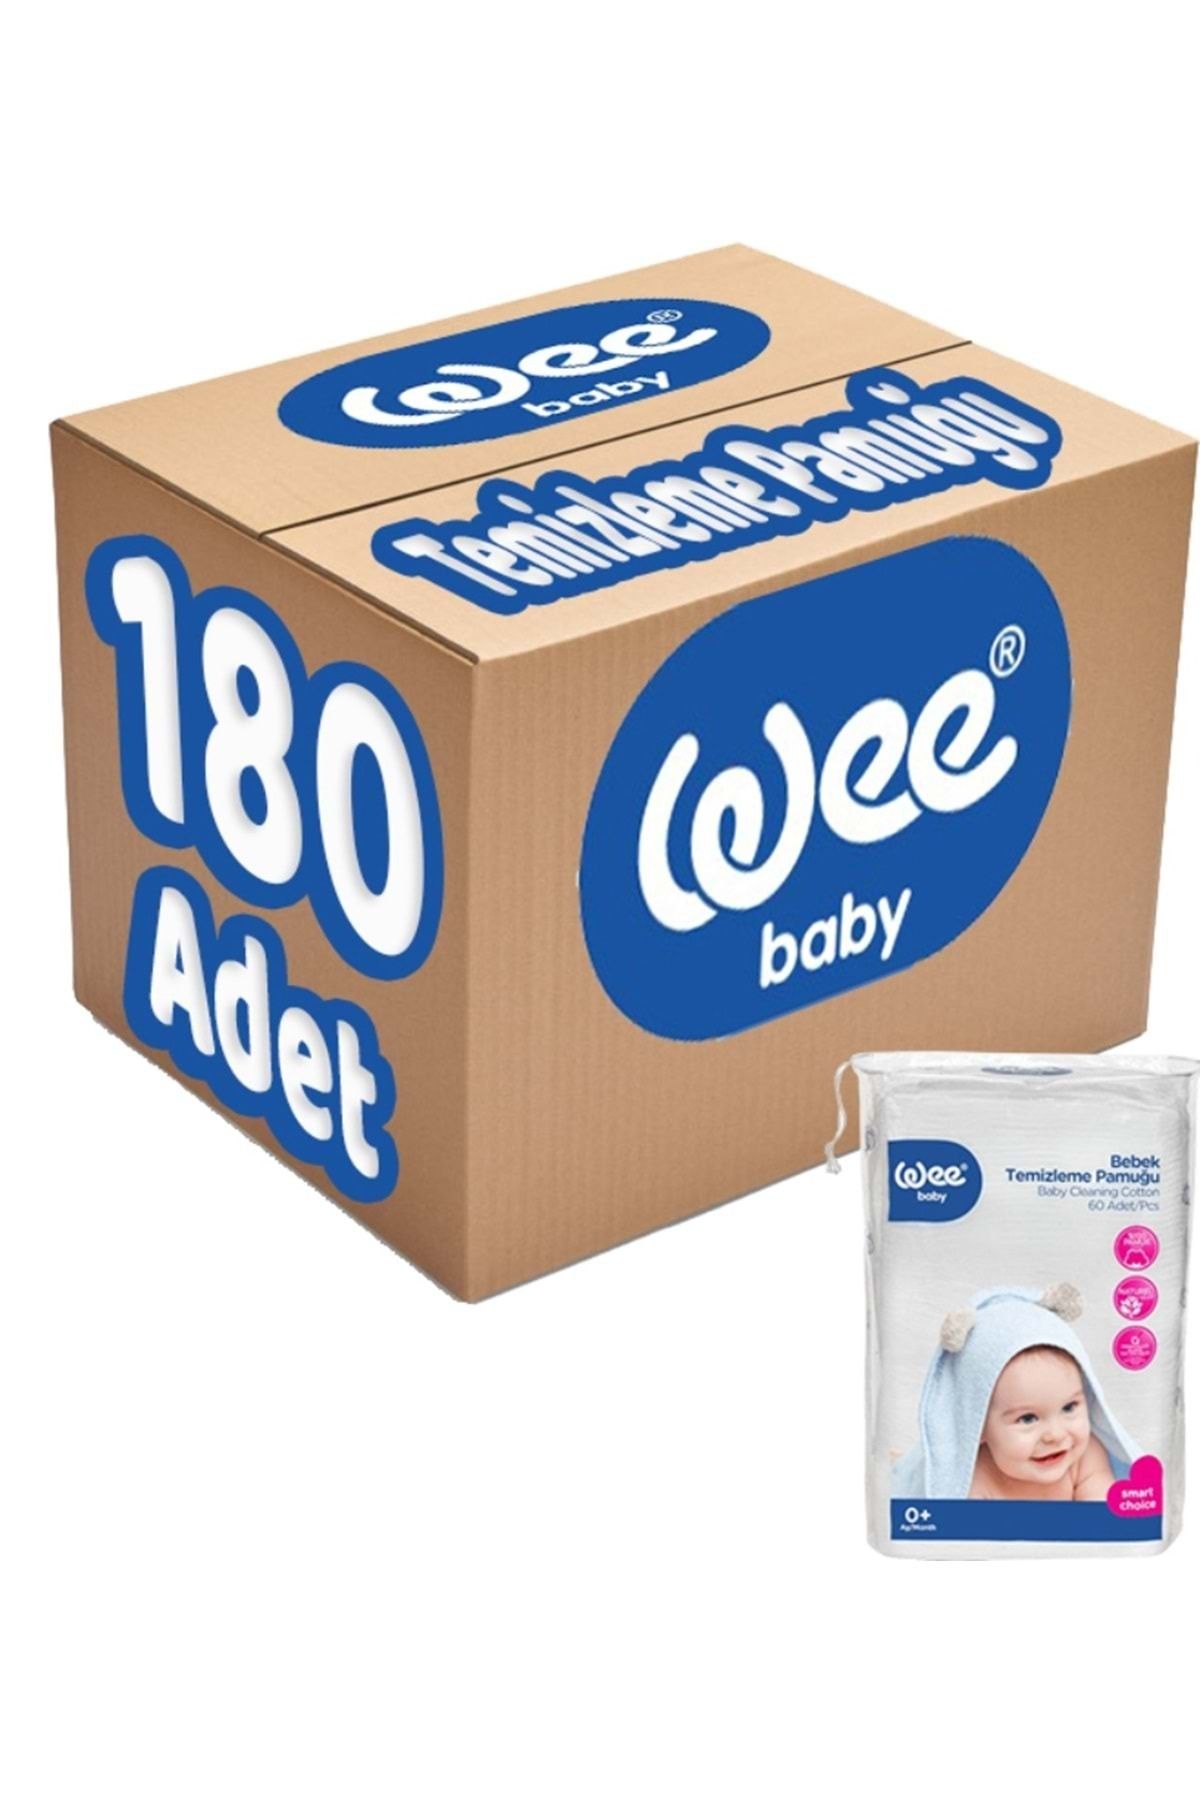 Wee Baby Bebek Temizleme Pamuğu 180 Adet (3pk*60)